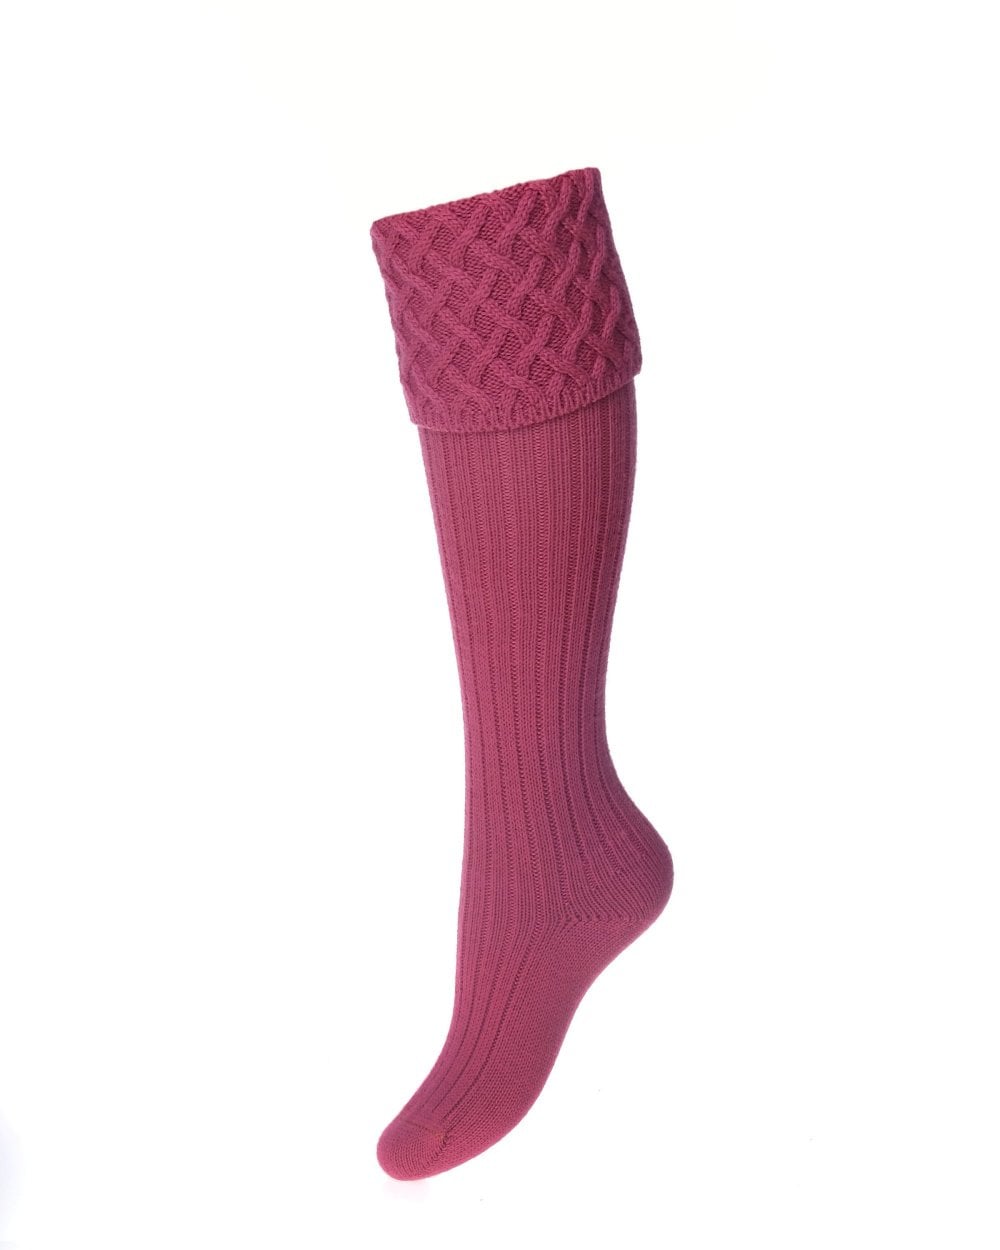 Lady Rannoch Socks - Dusky Pink